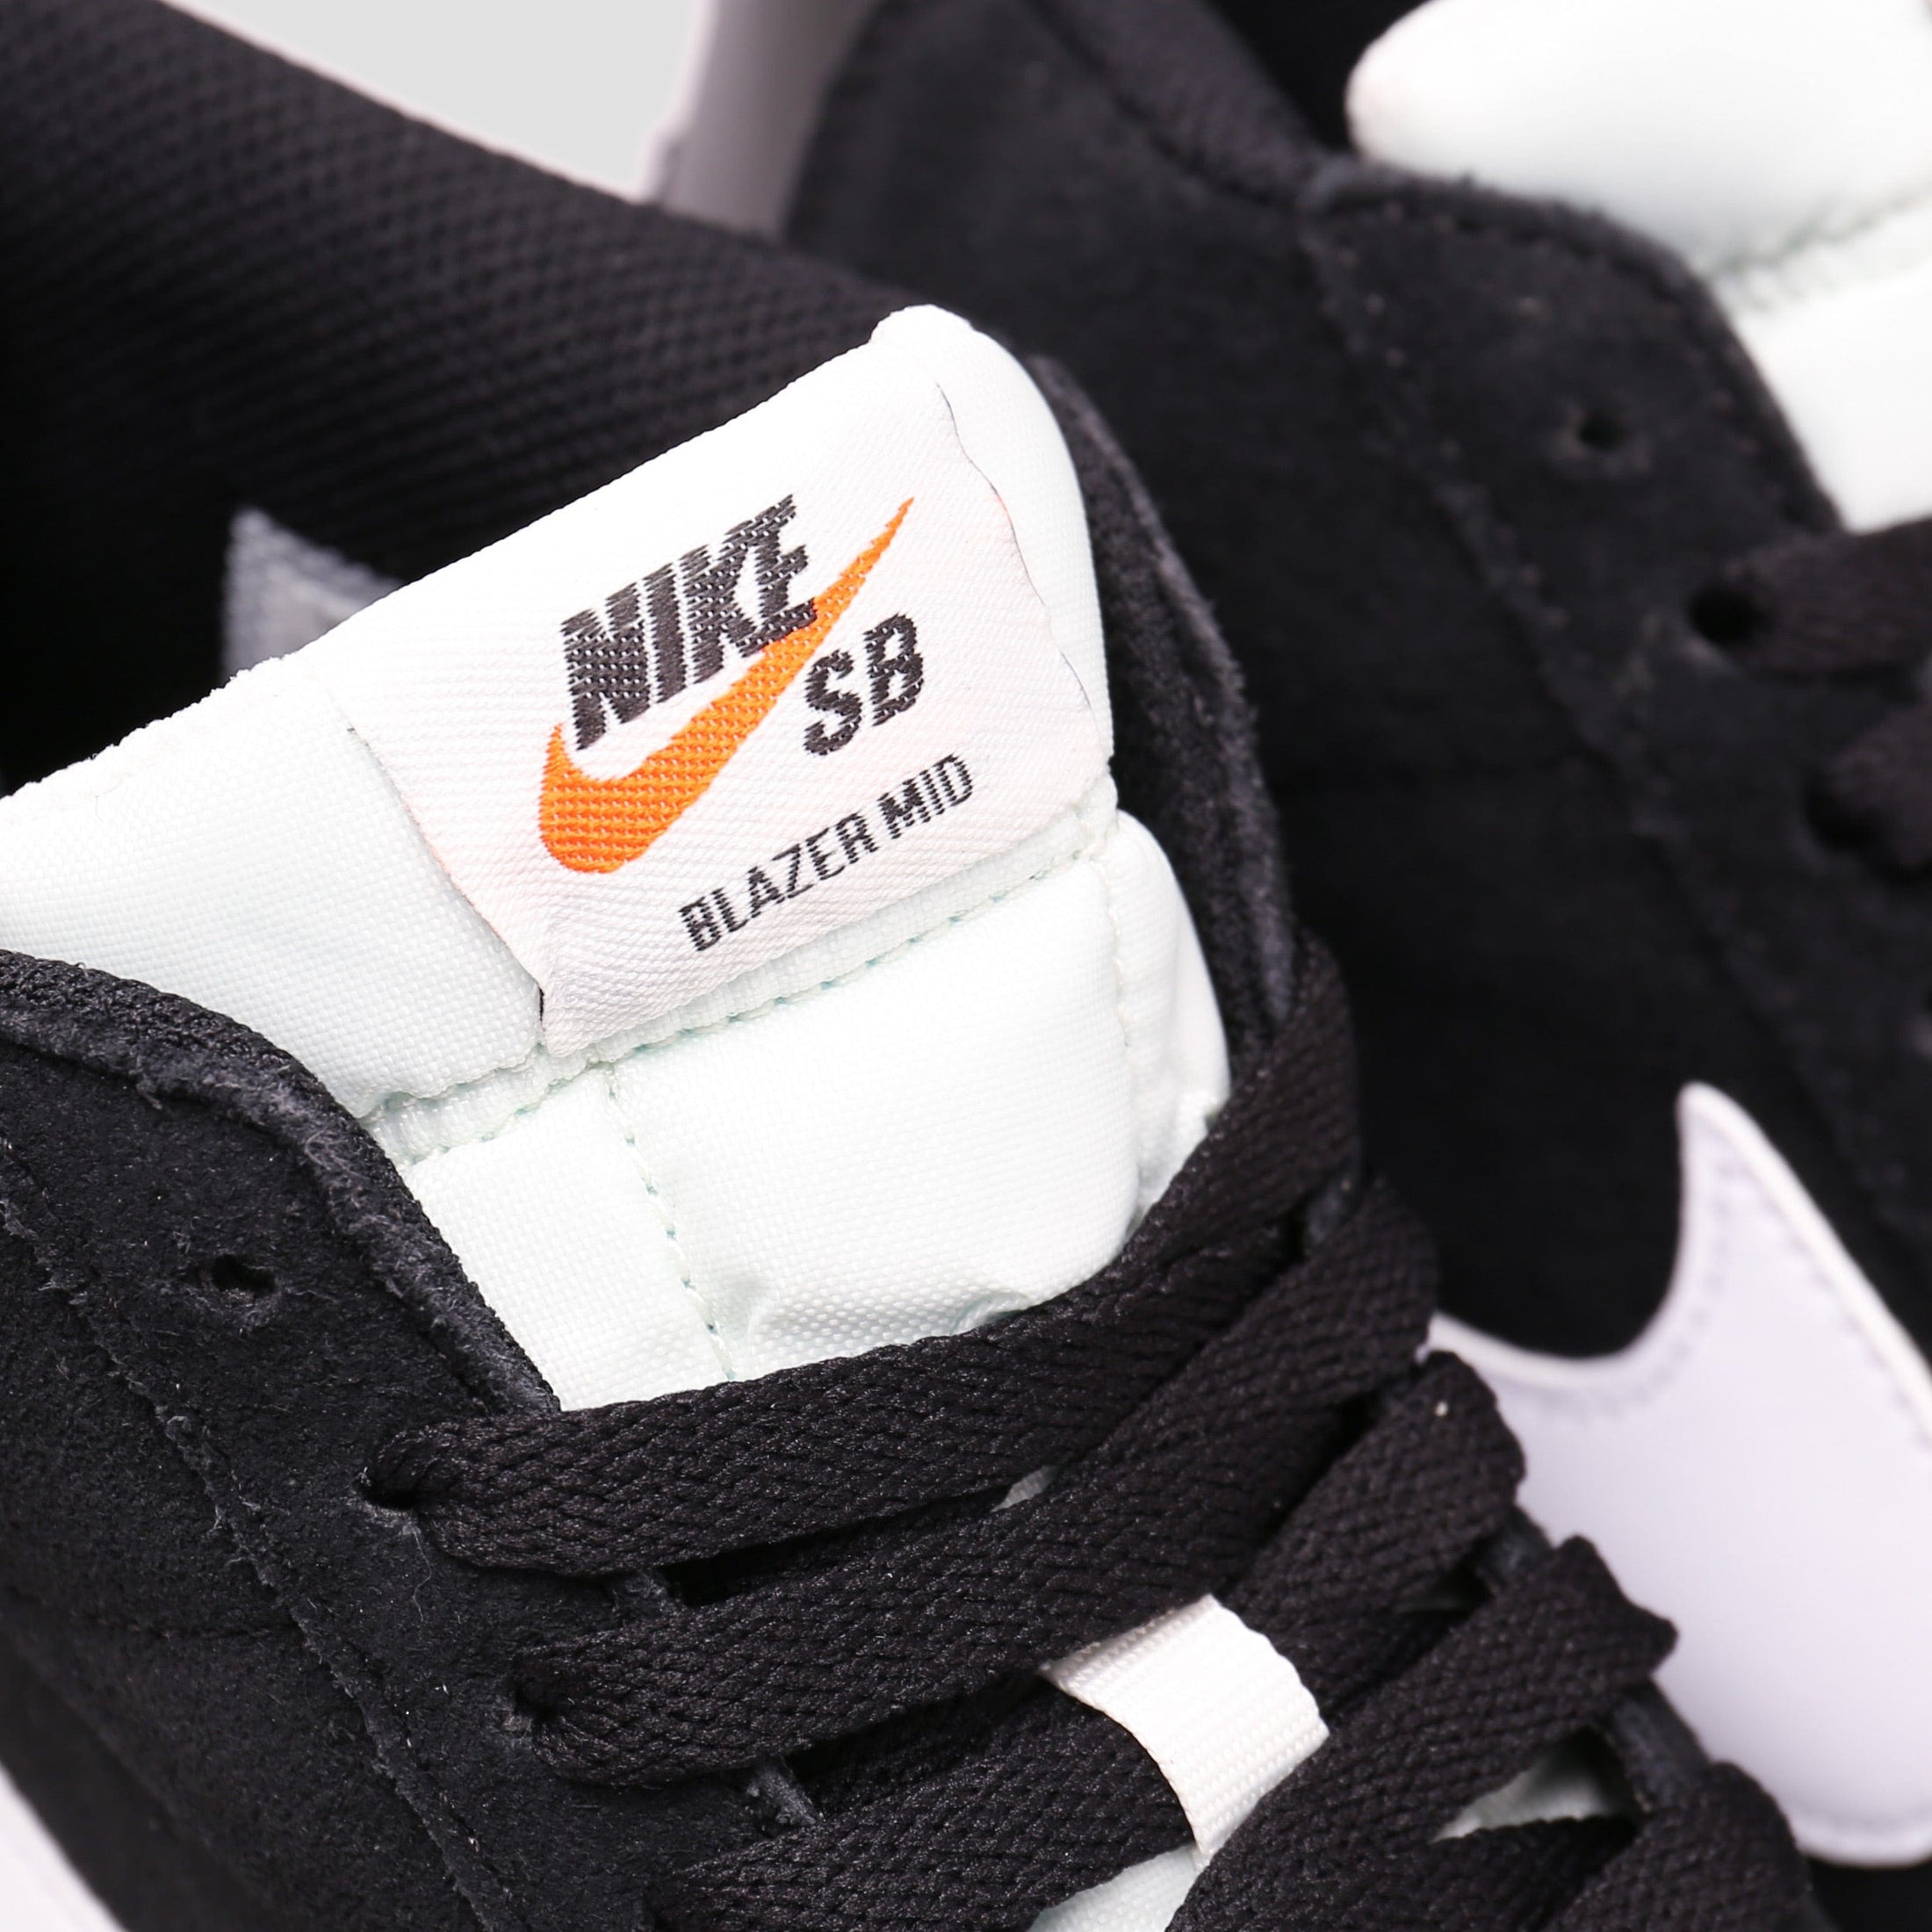 Nike SB Blazer Mid Shoes Black / White - Black - Sail